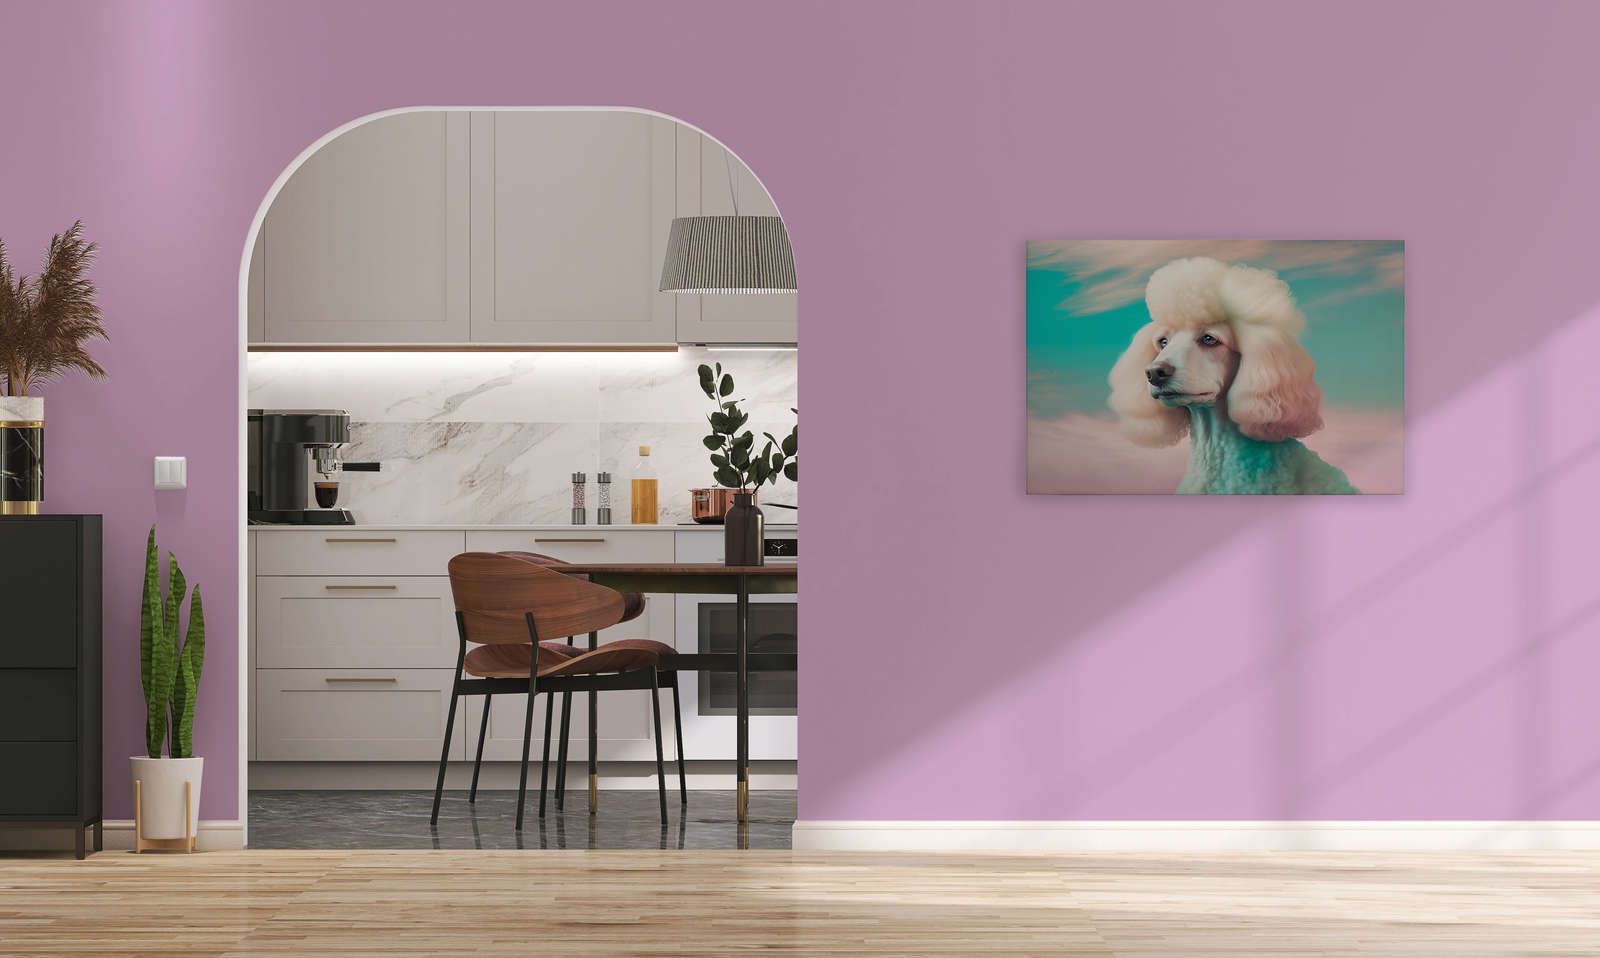             KI-Leinwandbild »rainbow dog« – 90 cm x 60 cm
        